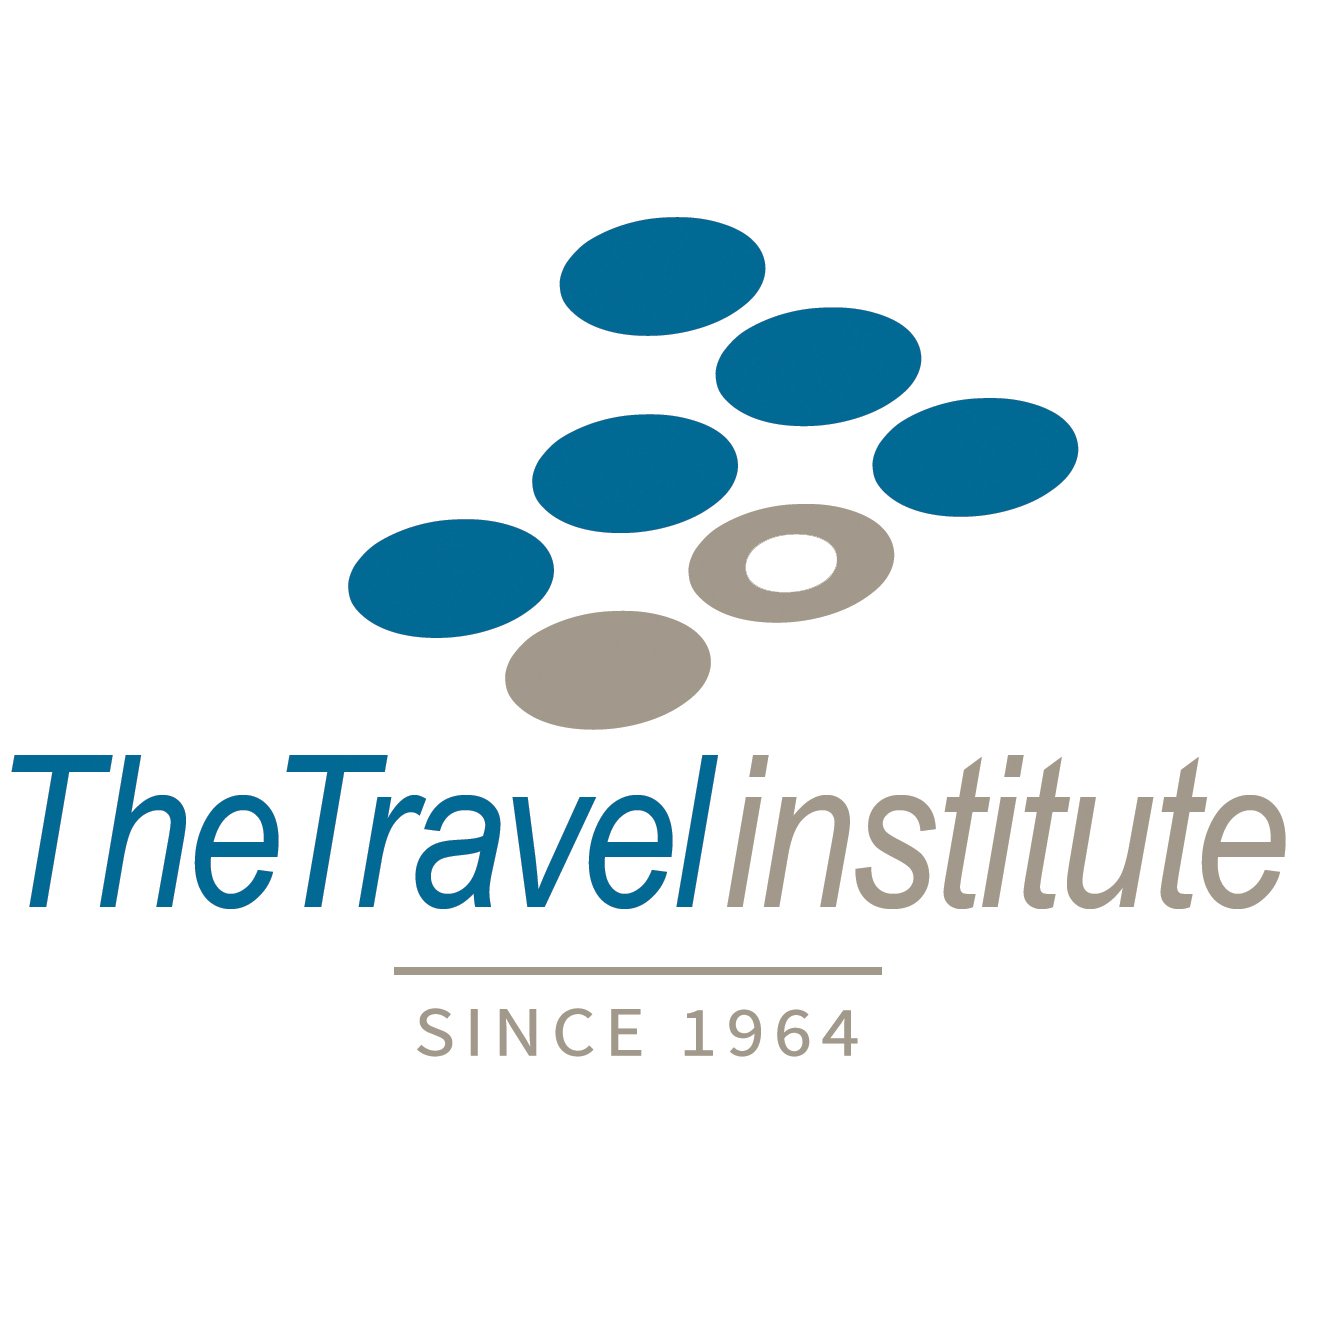 Best global travel institutes